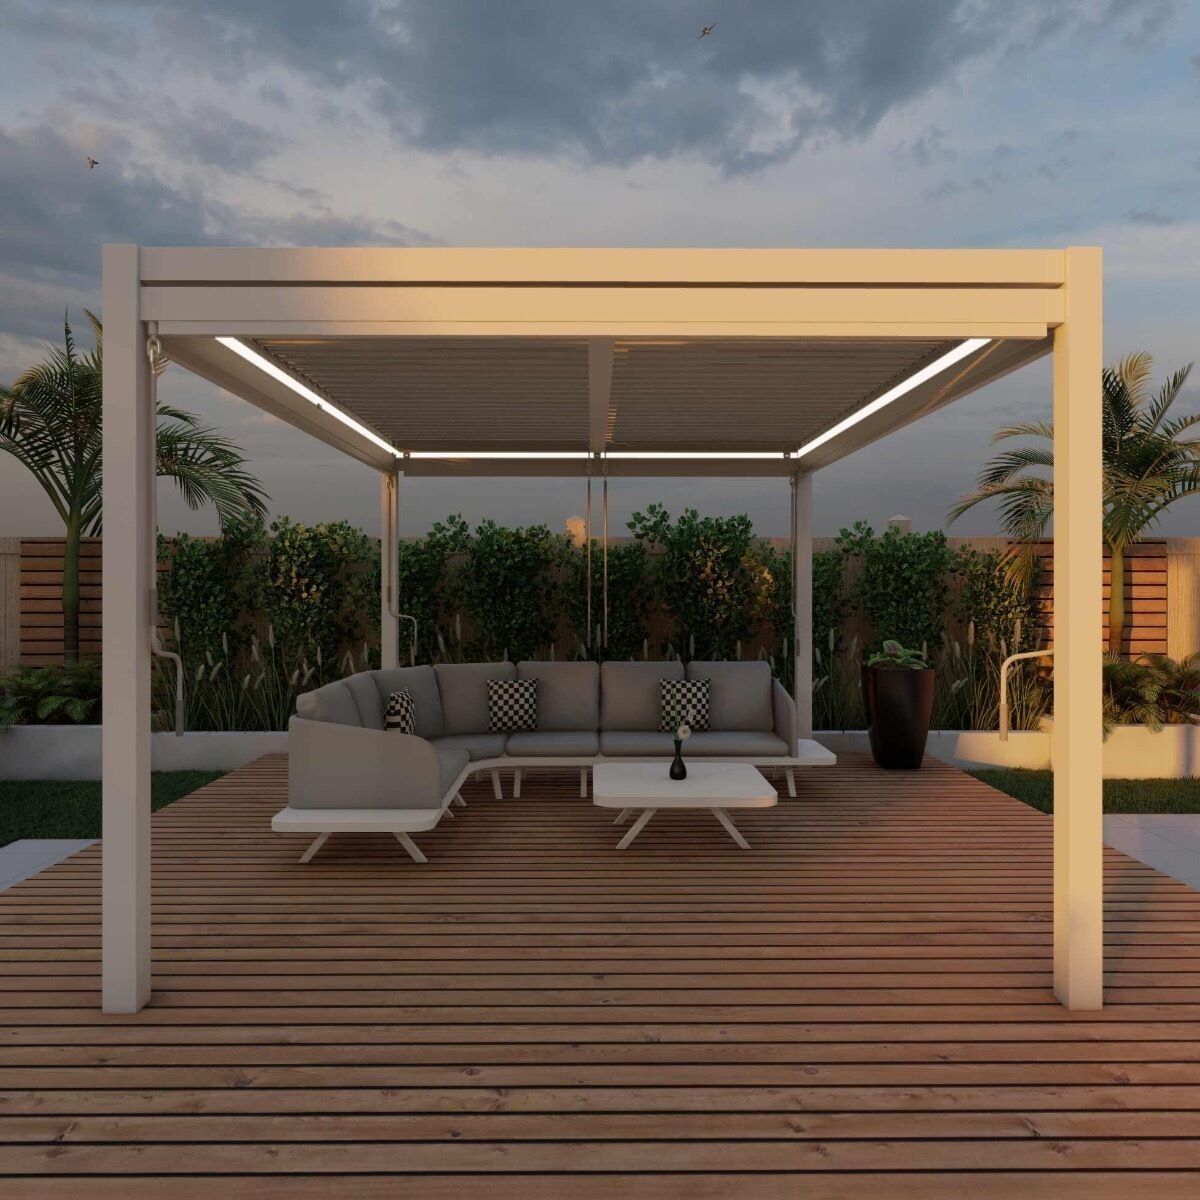 Maze Como - 3m x 4m Aluminium Metal Outdoor Garden Pergola with 4 Drop Sides & LED Lighting - White product image